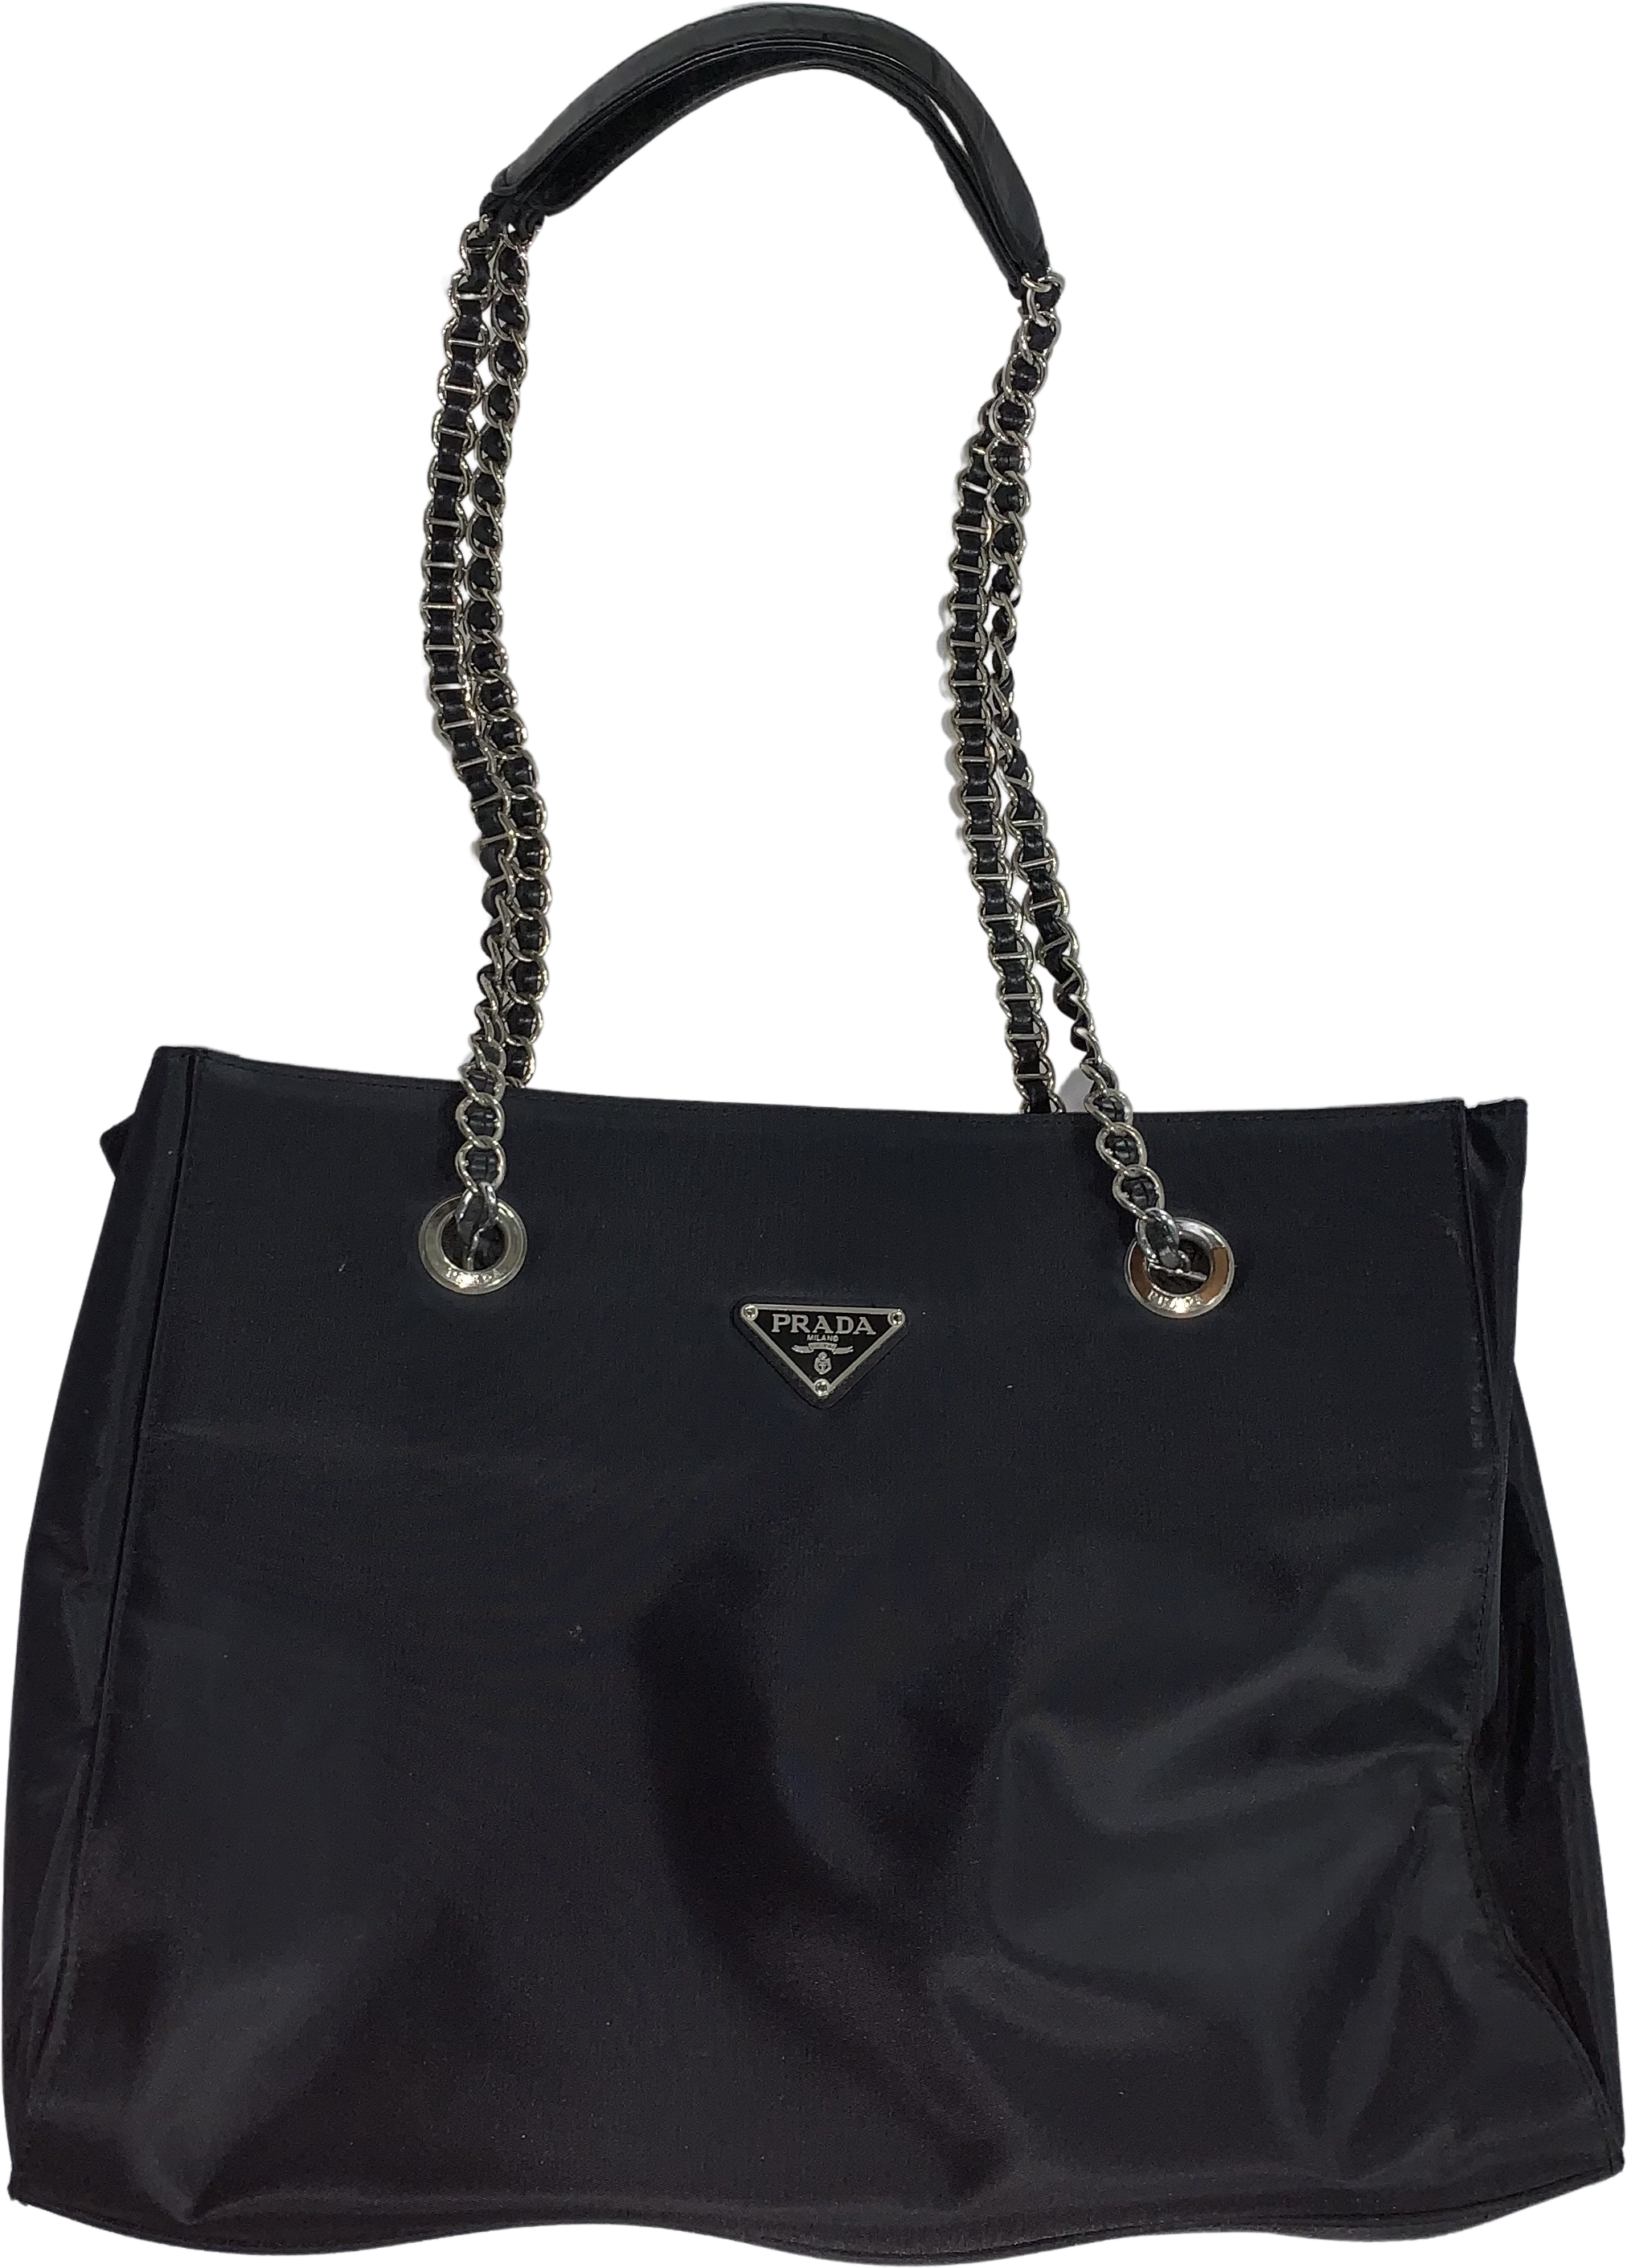 PRADA - Shoulder - Black - Mochila Prada Re-nylon en lona negra - NERO -  Hand - Bag - Bag - ep_vintage luxury Store - BR4894 – dct - Leather